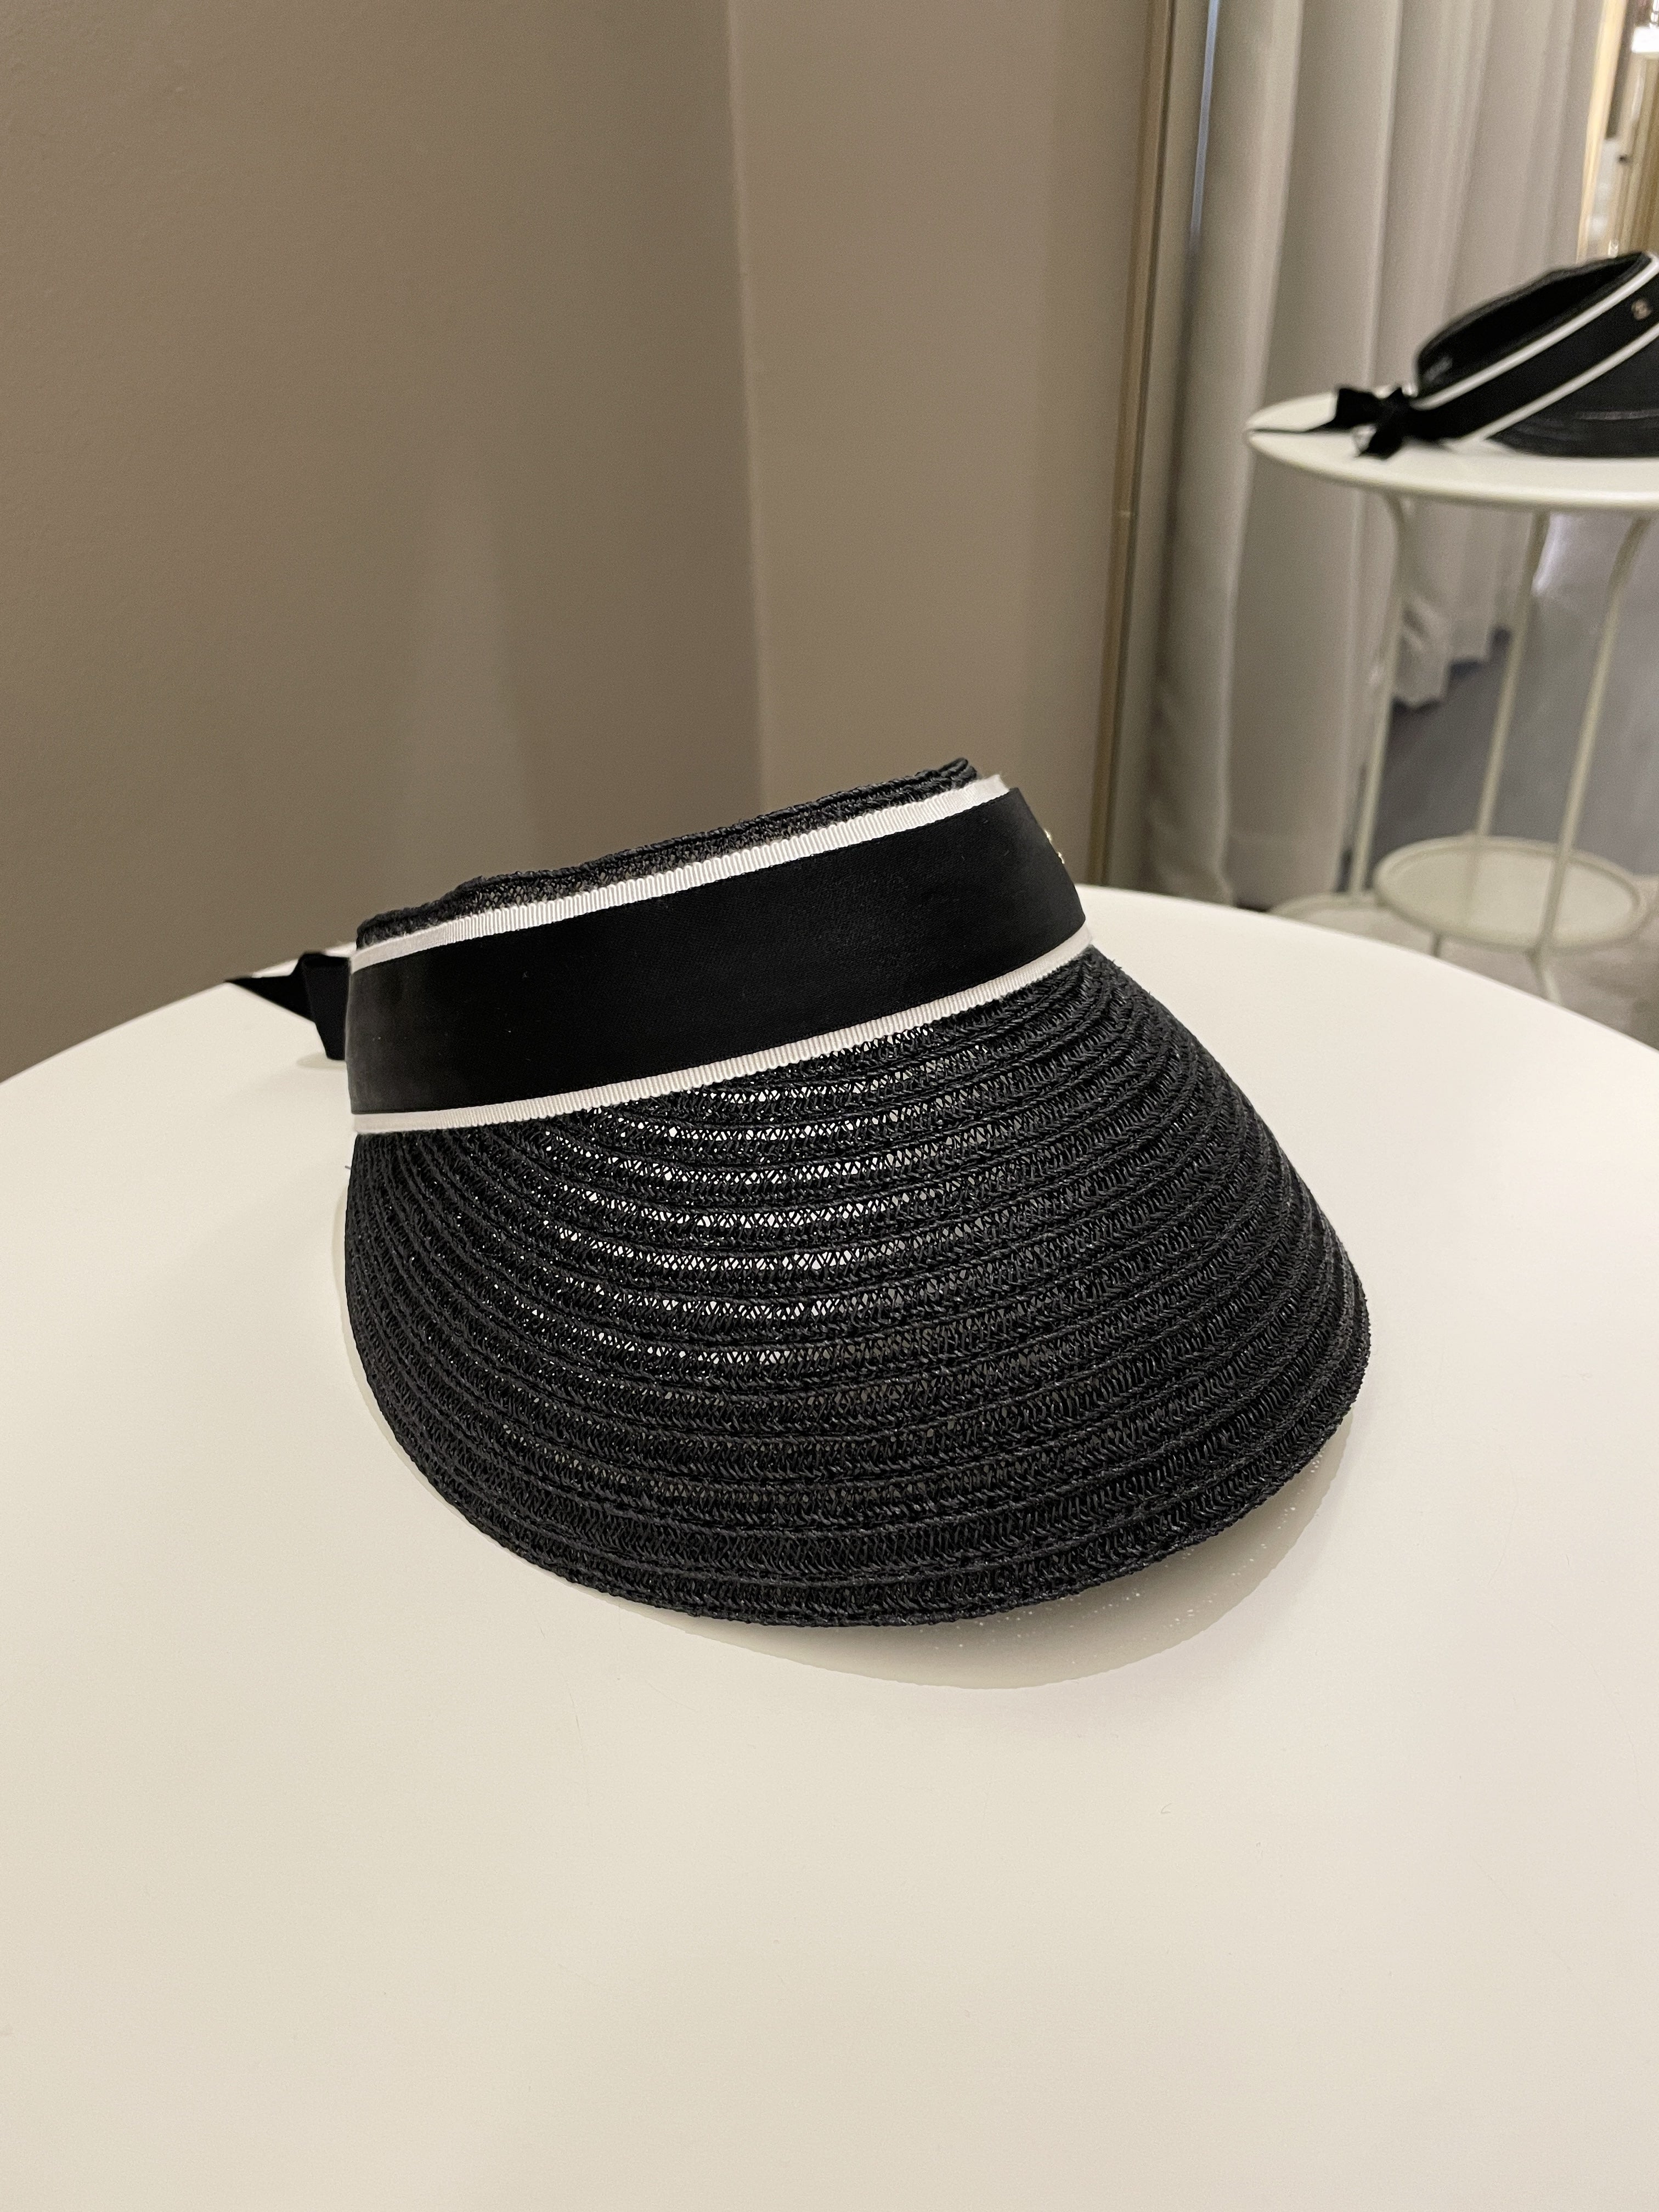 Chanel Black Straw CC Visor Hat Black straw